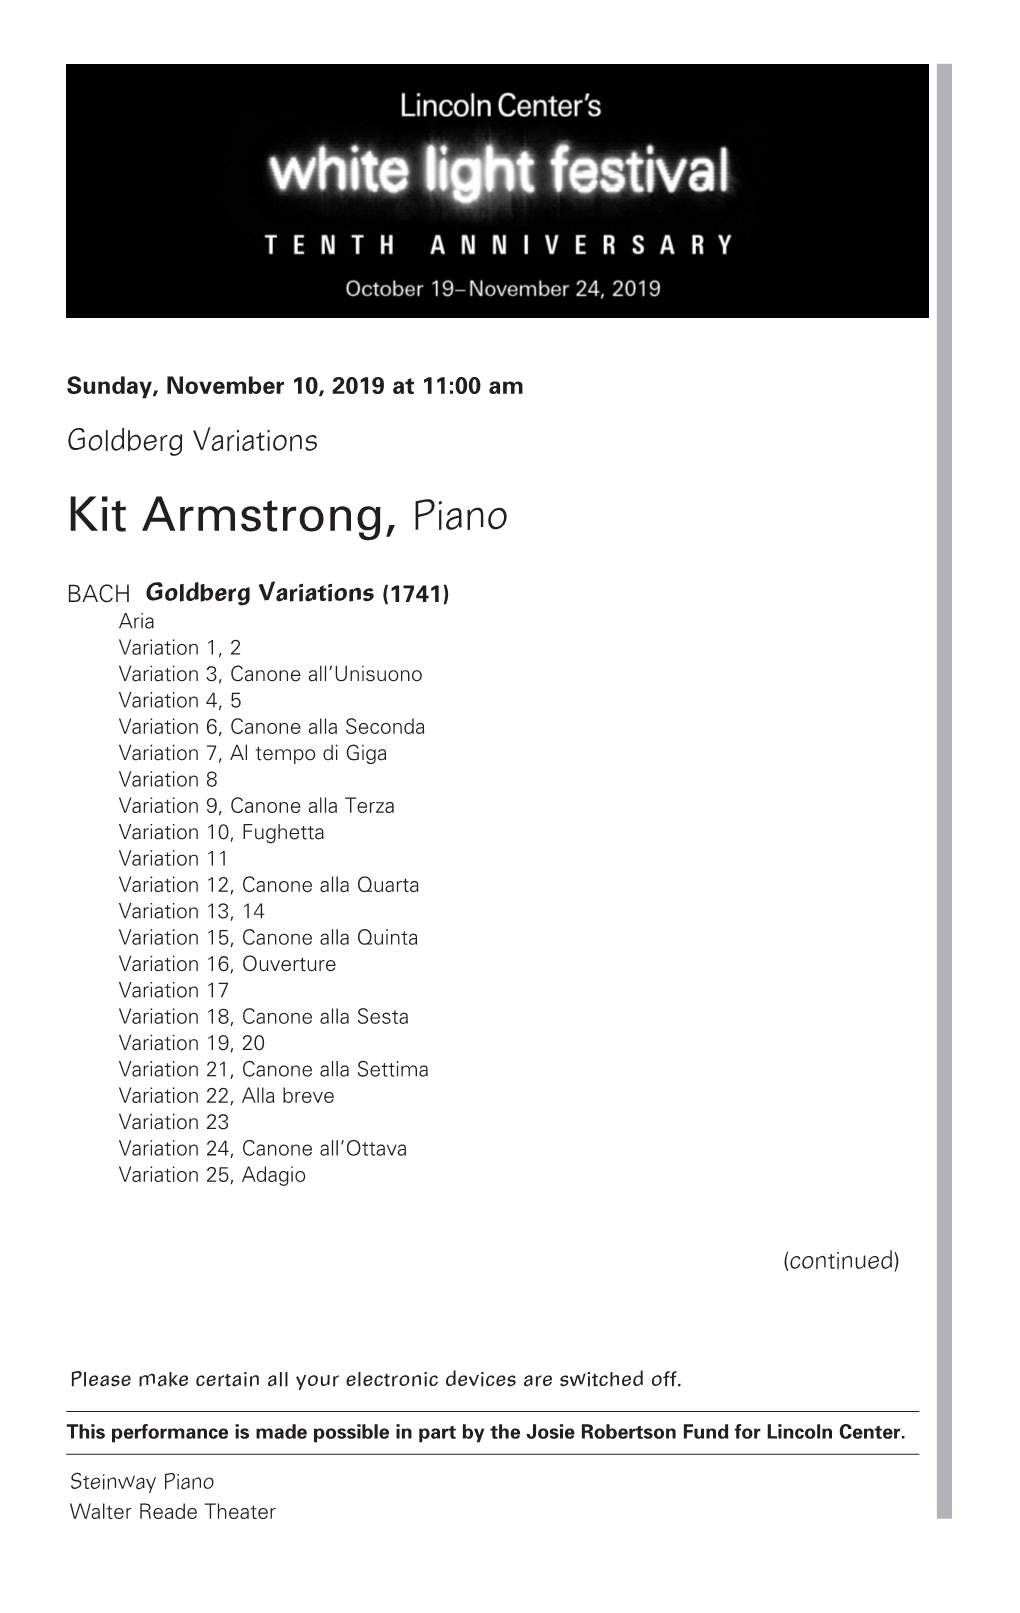 Kit Armstrong, Piano